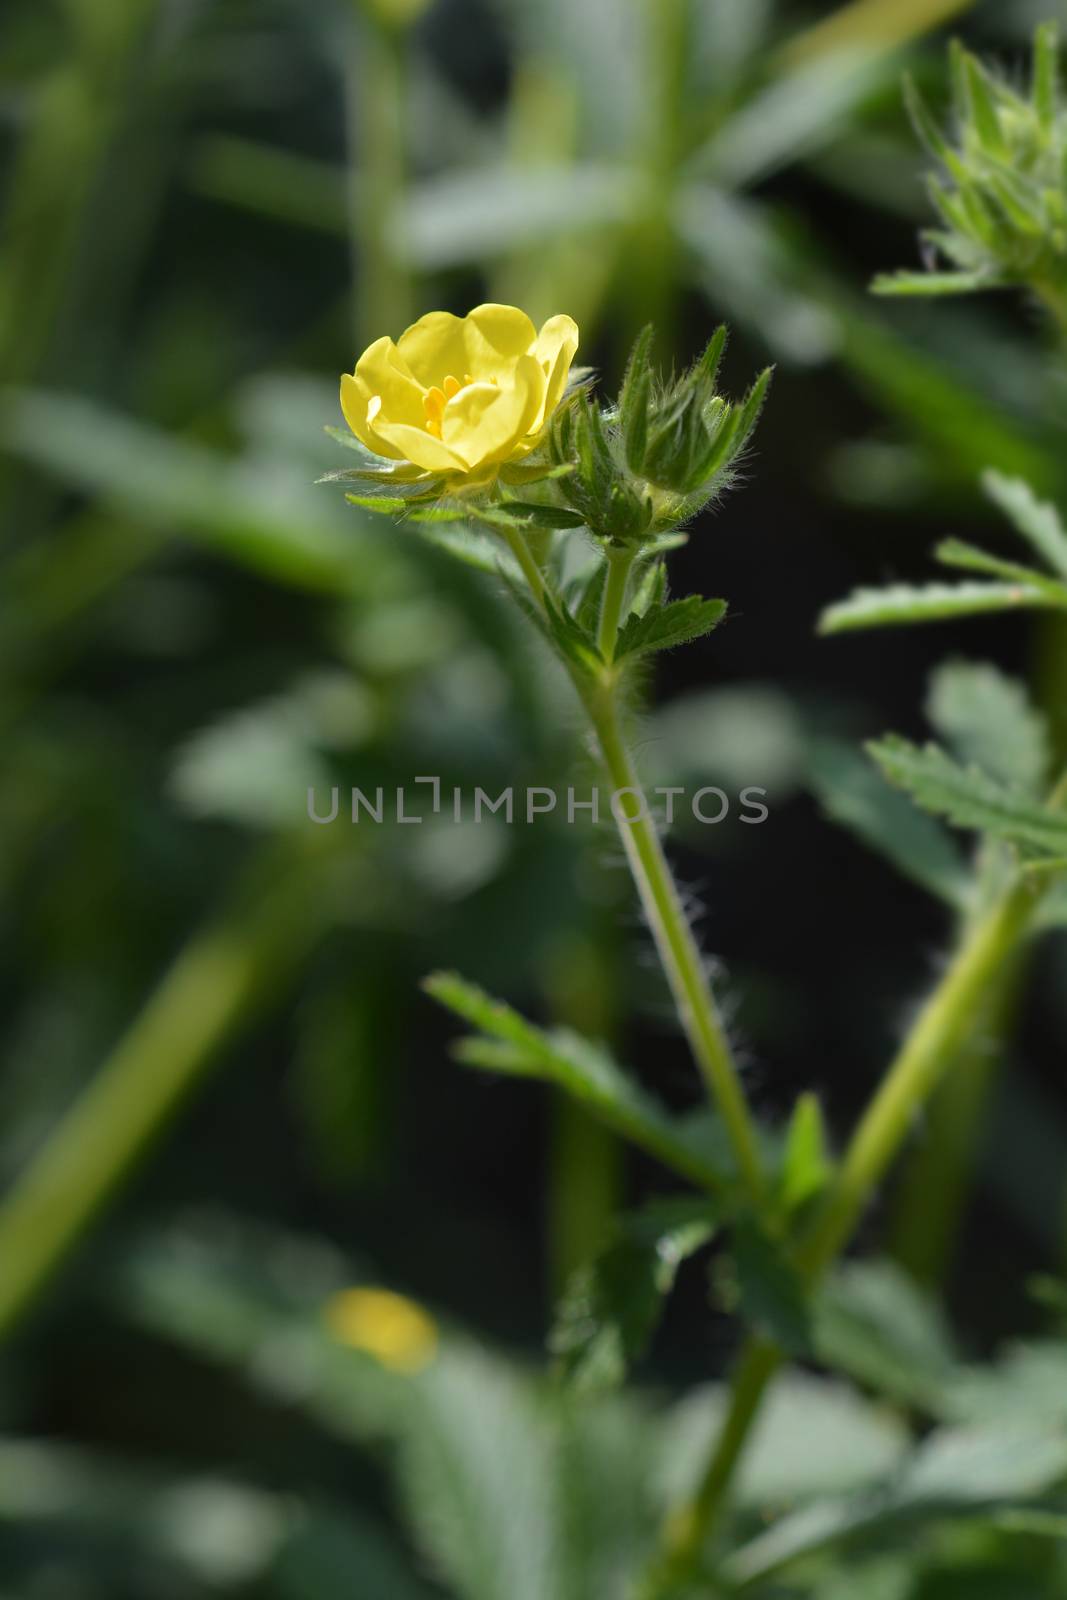 Sulphur cinquefoil yellow flower - Latin name - Potentilla recta